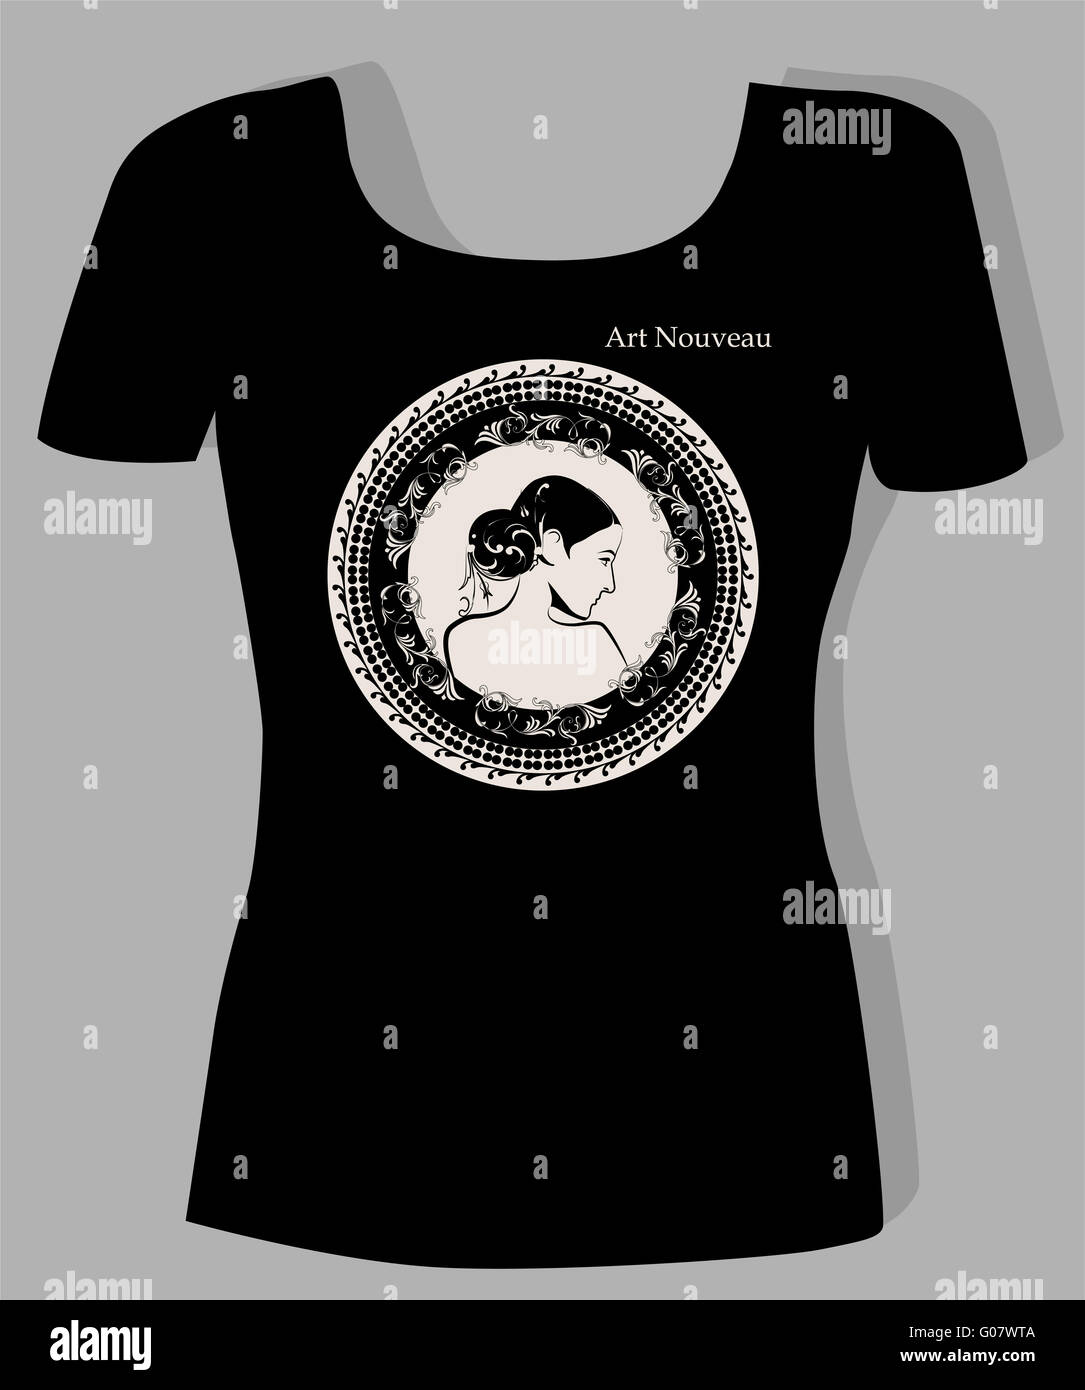 Clothing line art t shirt black -Fotos und -Bildmaterial in hoher Auflösung  – Alamy